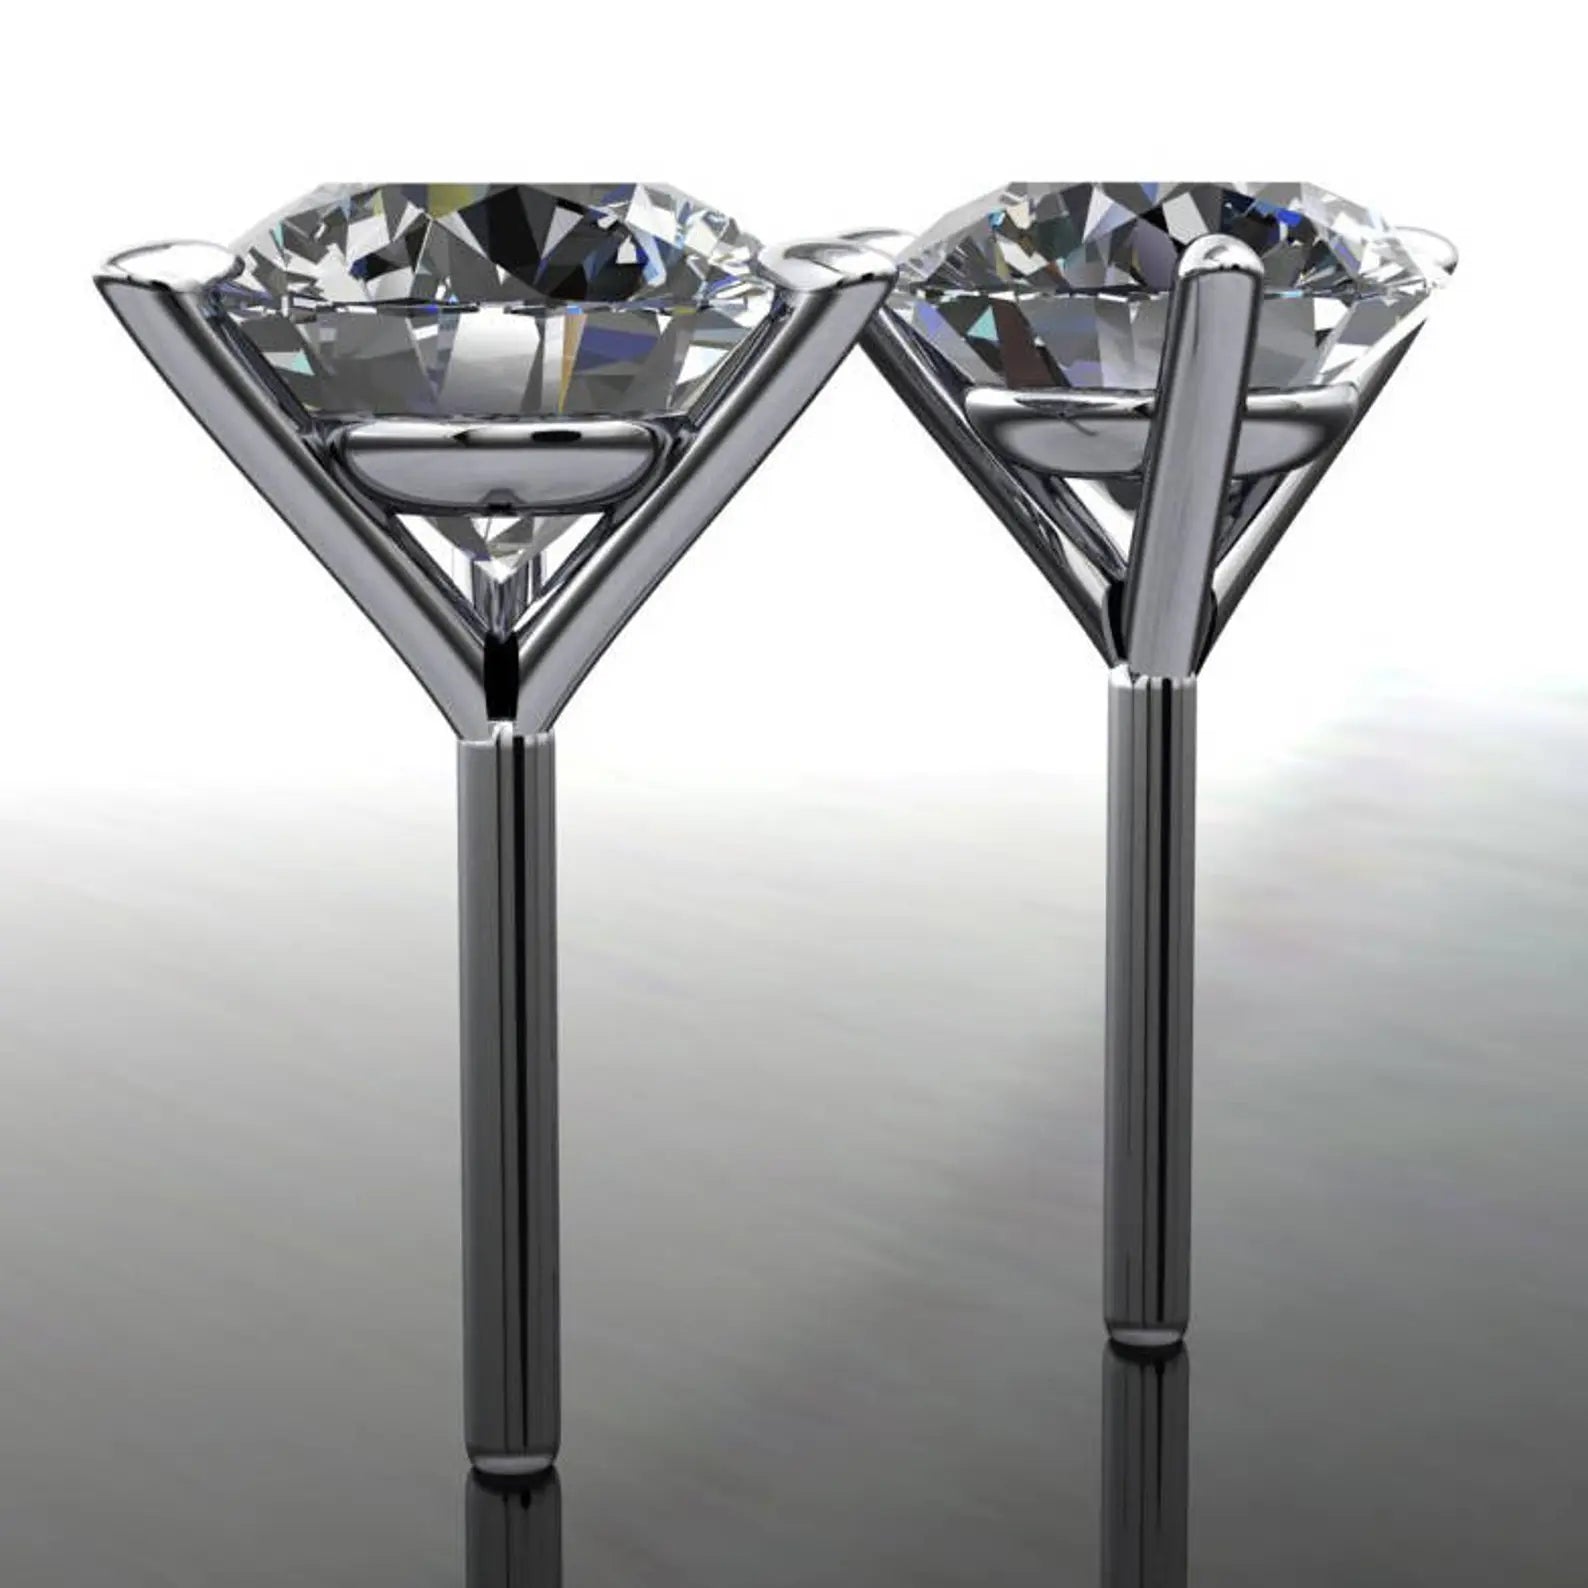 2 carat diamond cut NEO moissanite earrings, 14k gold stud earrings - J Hollywood Designs